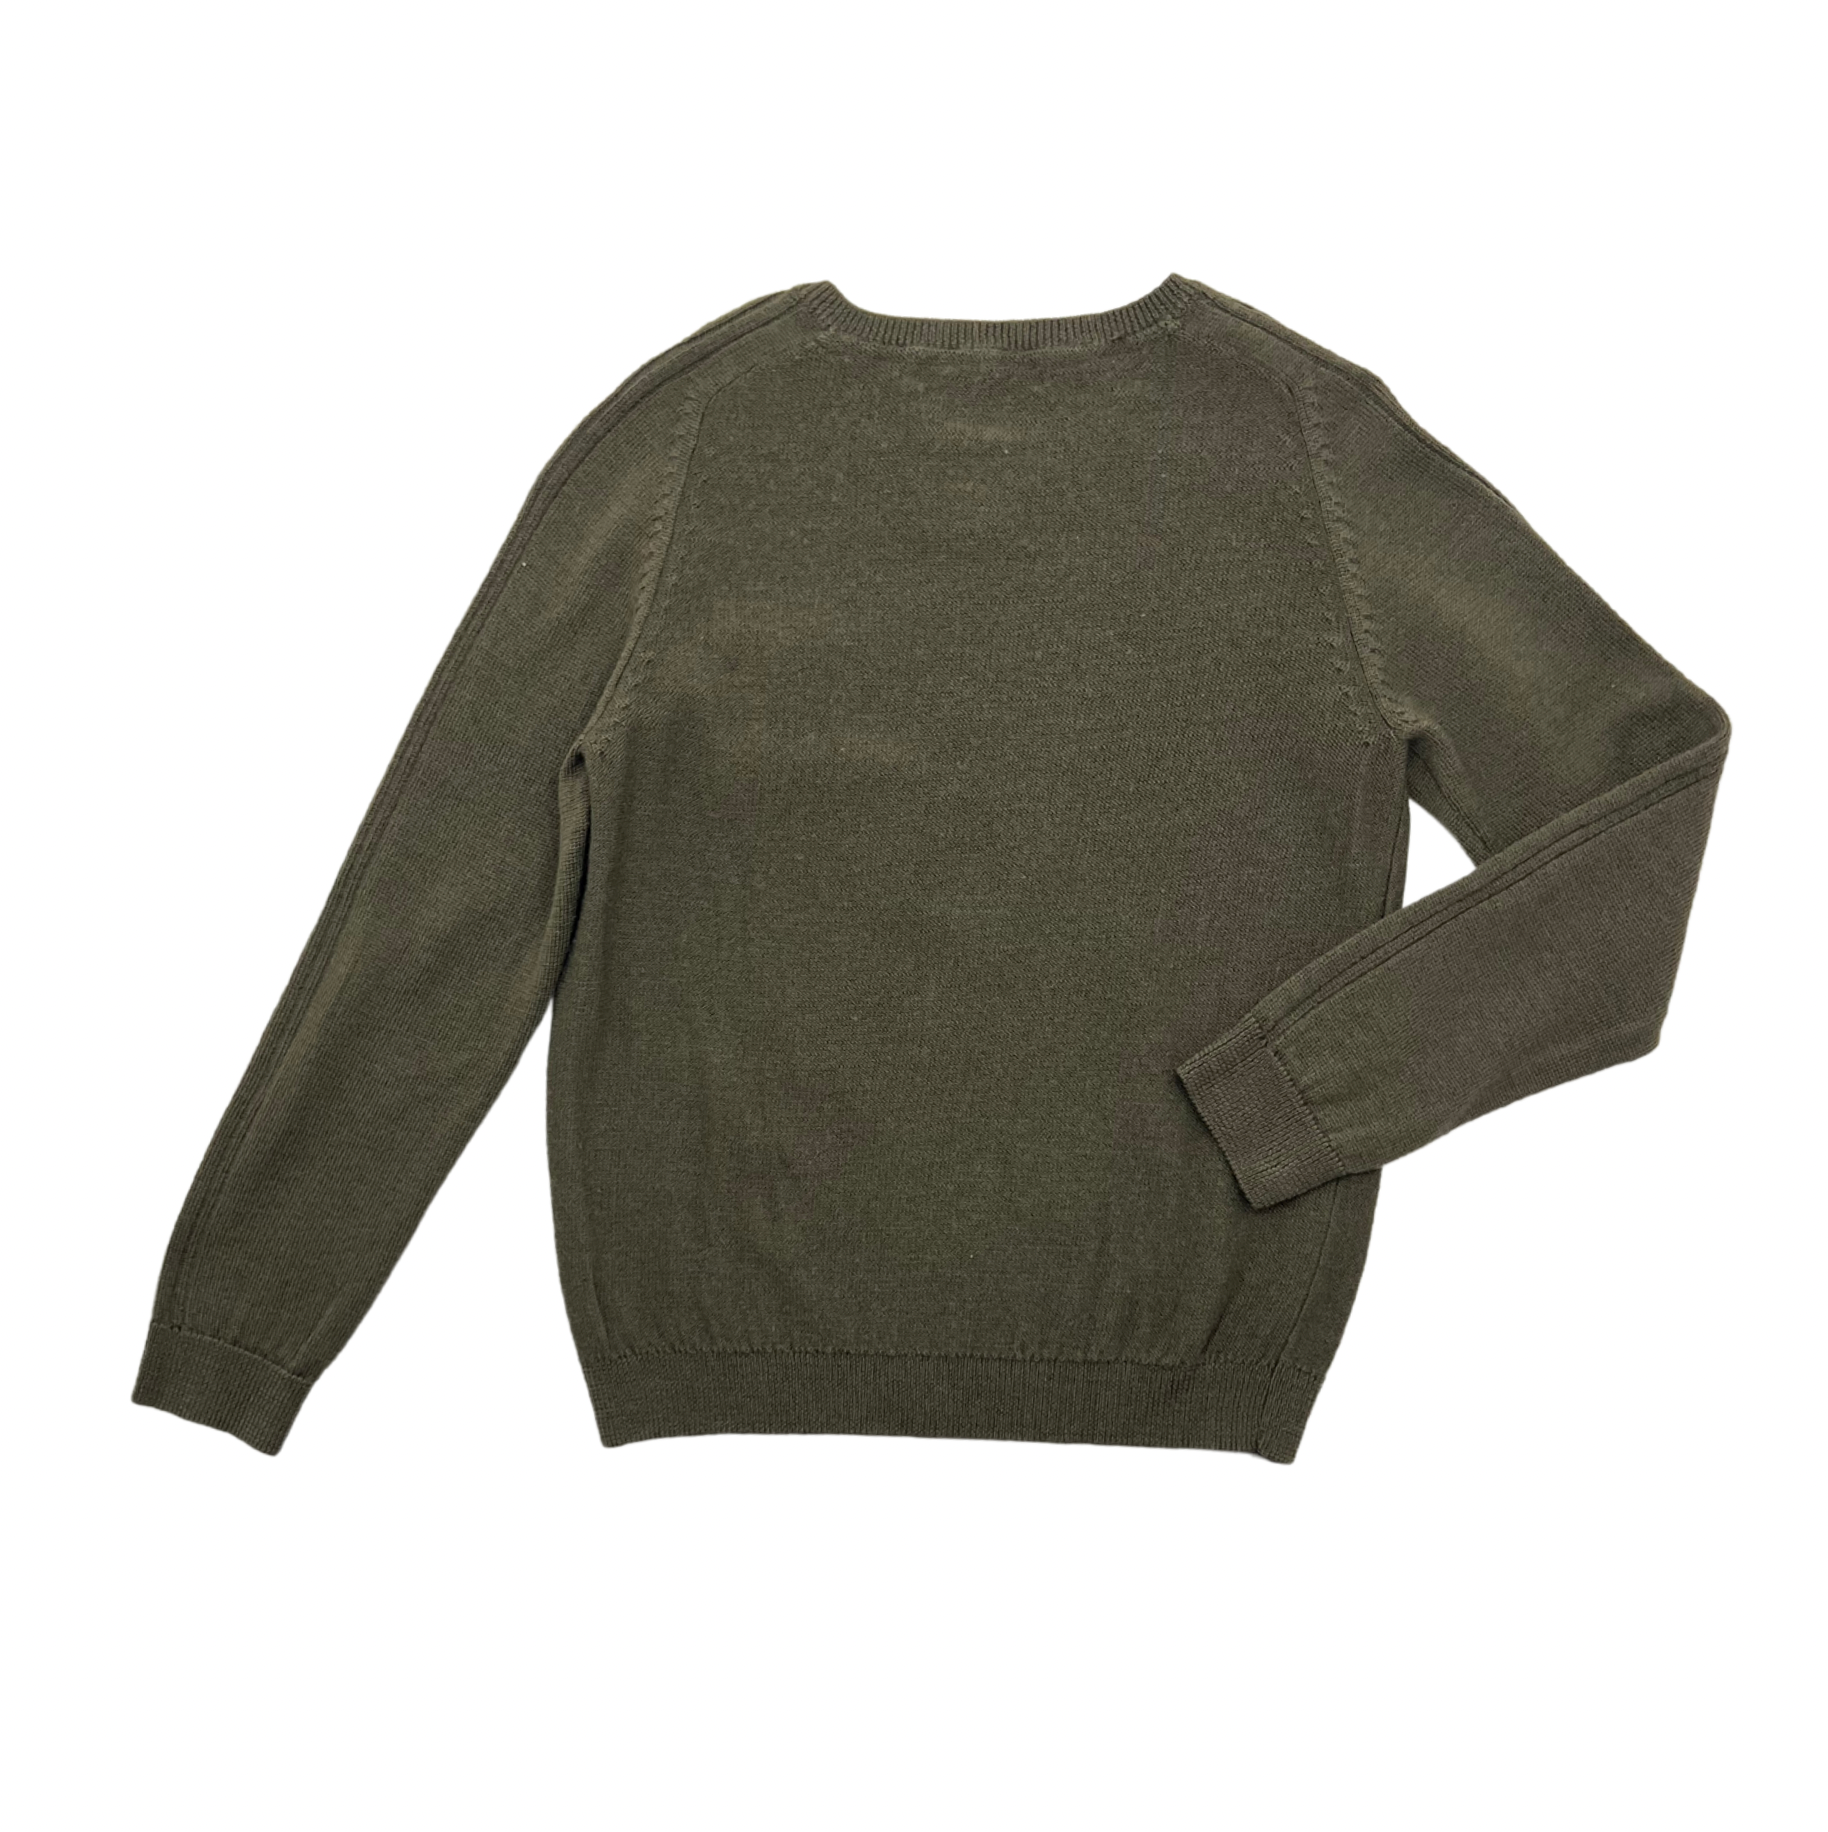 BONPOINT - Khaki wool sweater - 6 years old